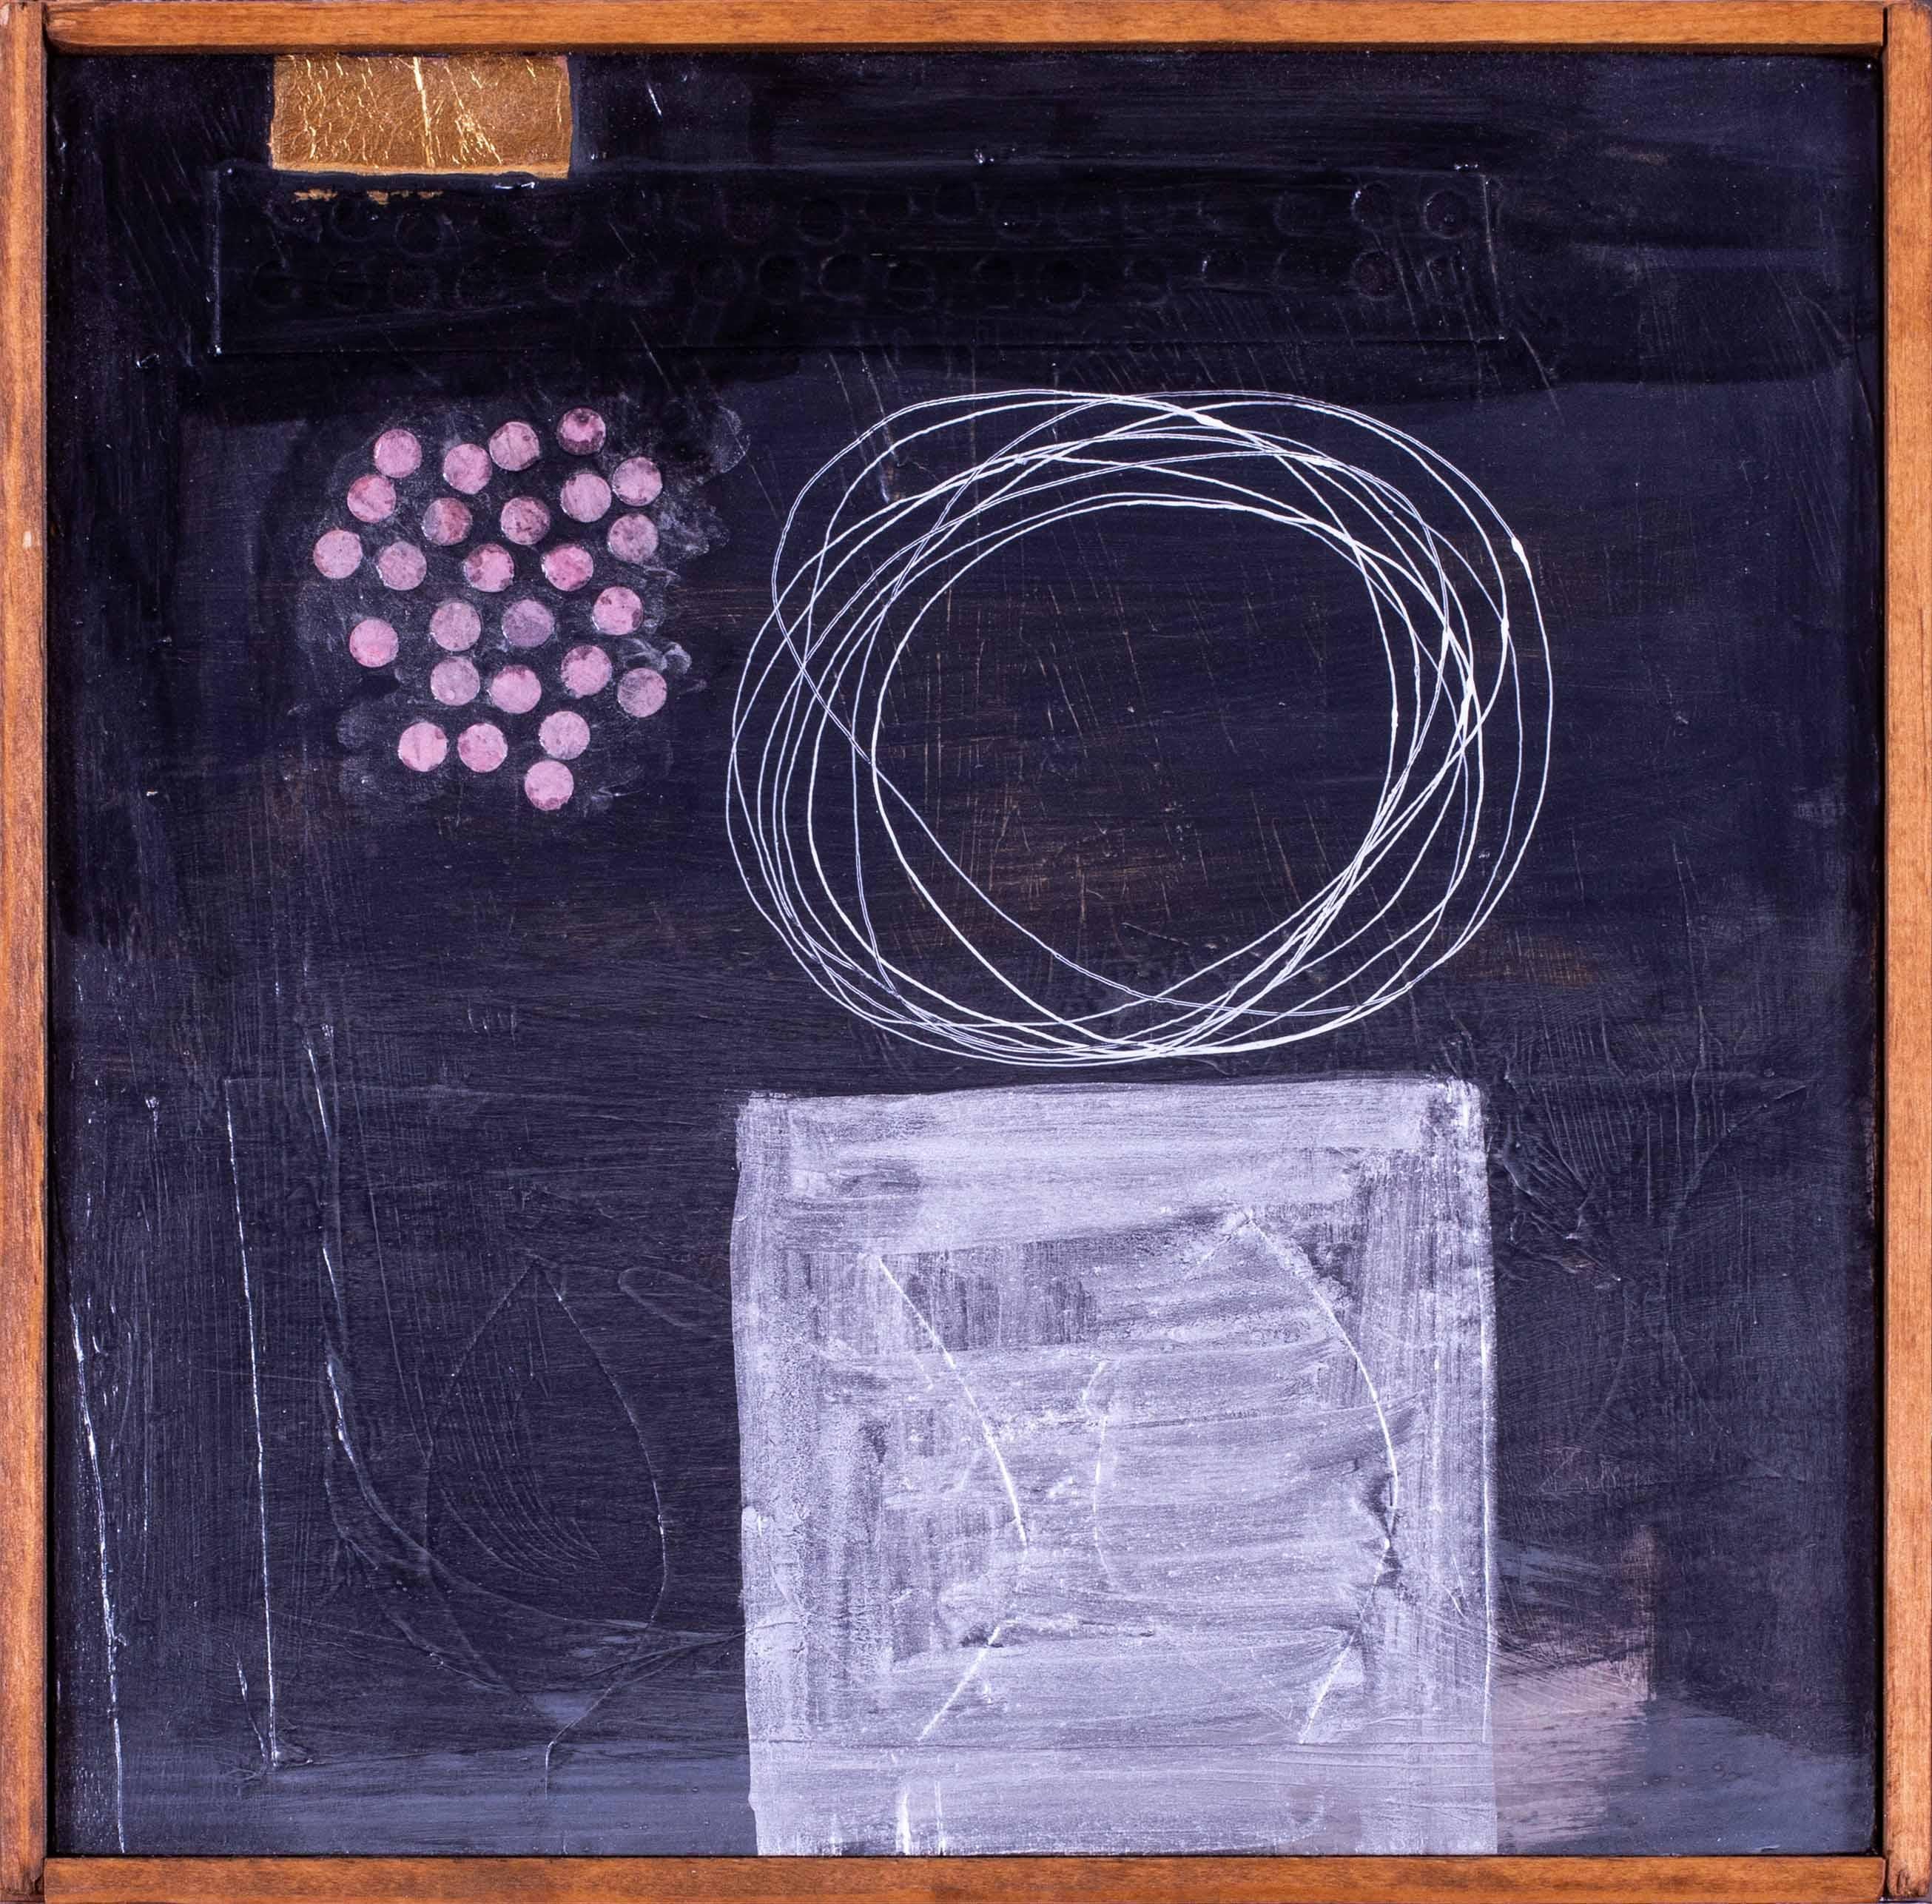 L'artiste abstraite américaine Giorgia Siriaco, œuvre carrée contemporaine en techniques mixtes - Mixed Media Art de Georgia Siriaco